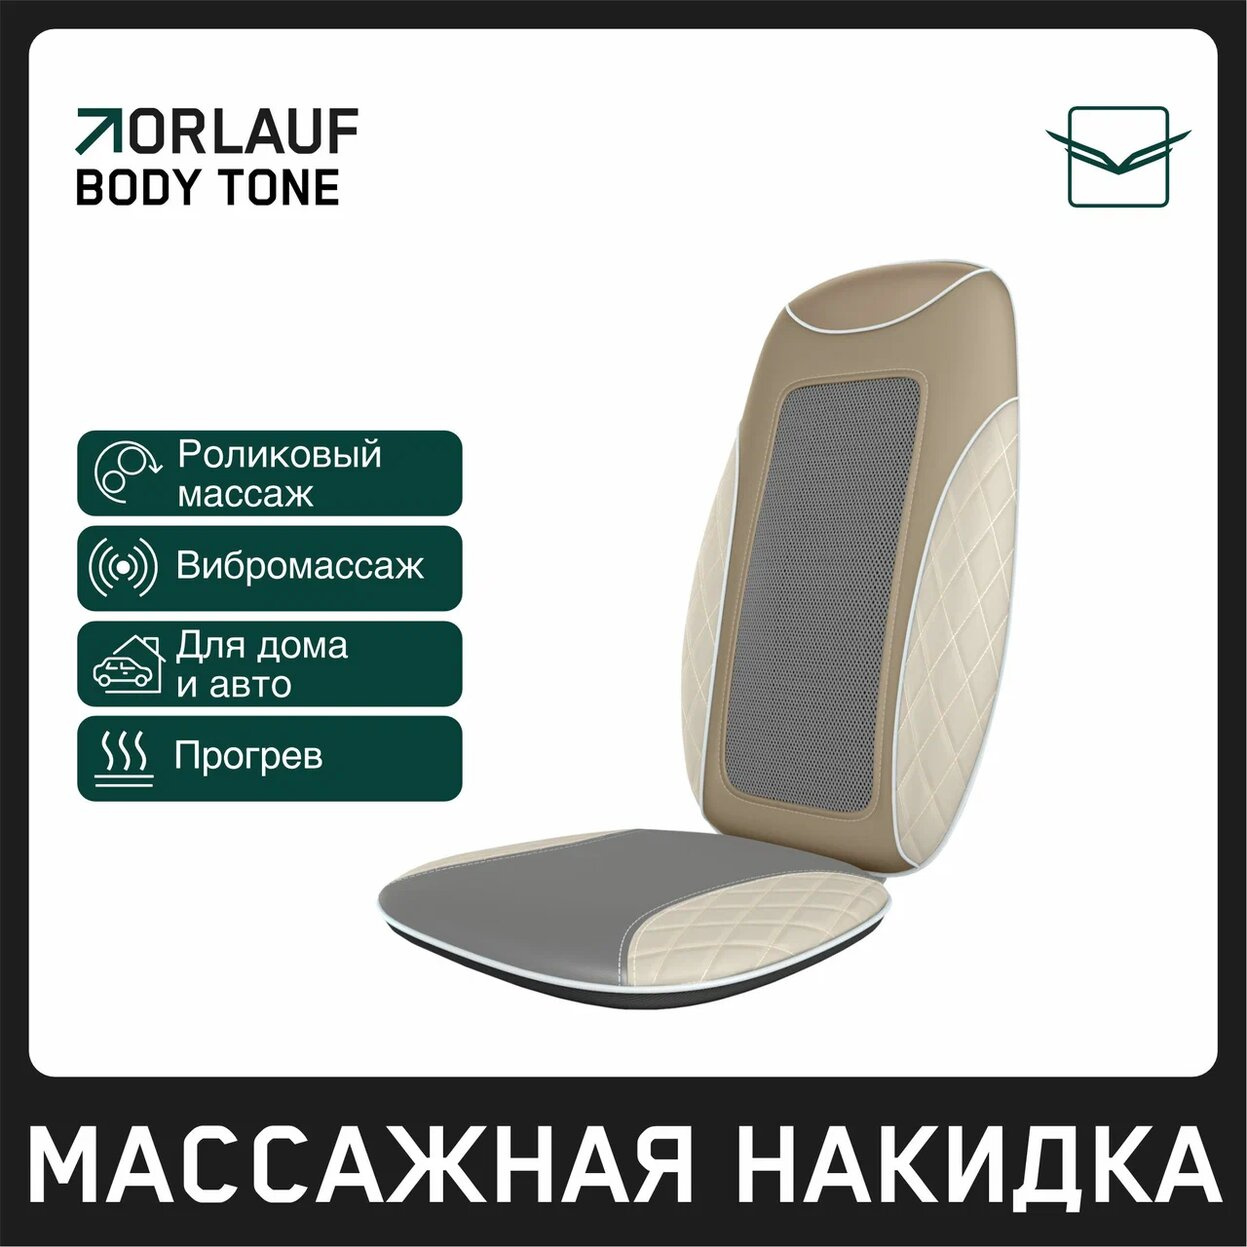 Body Tone в СПб по цене 15400 ₽ в категории каталог Orlauf